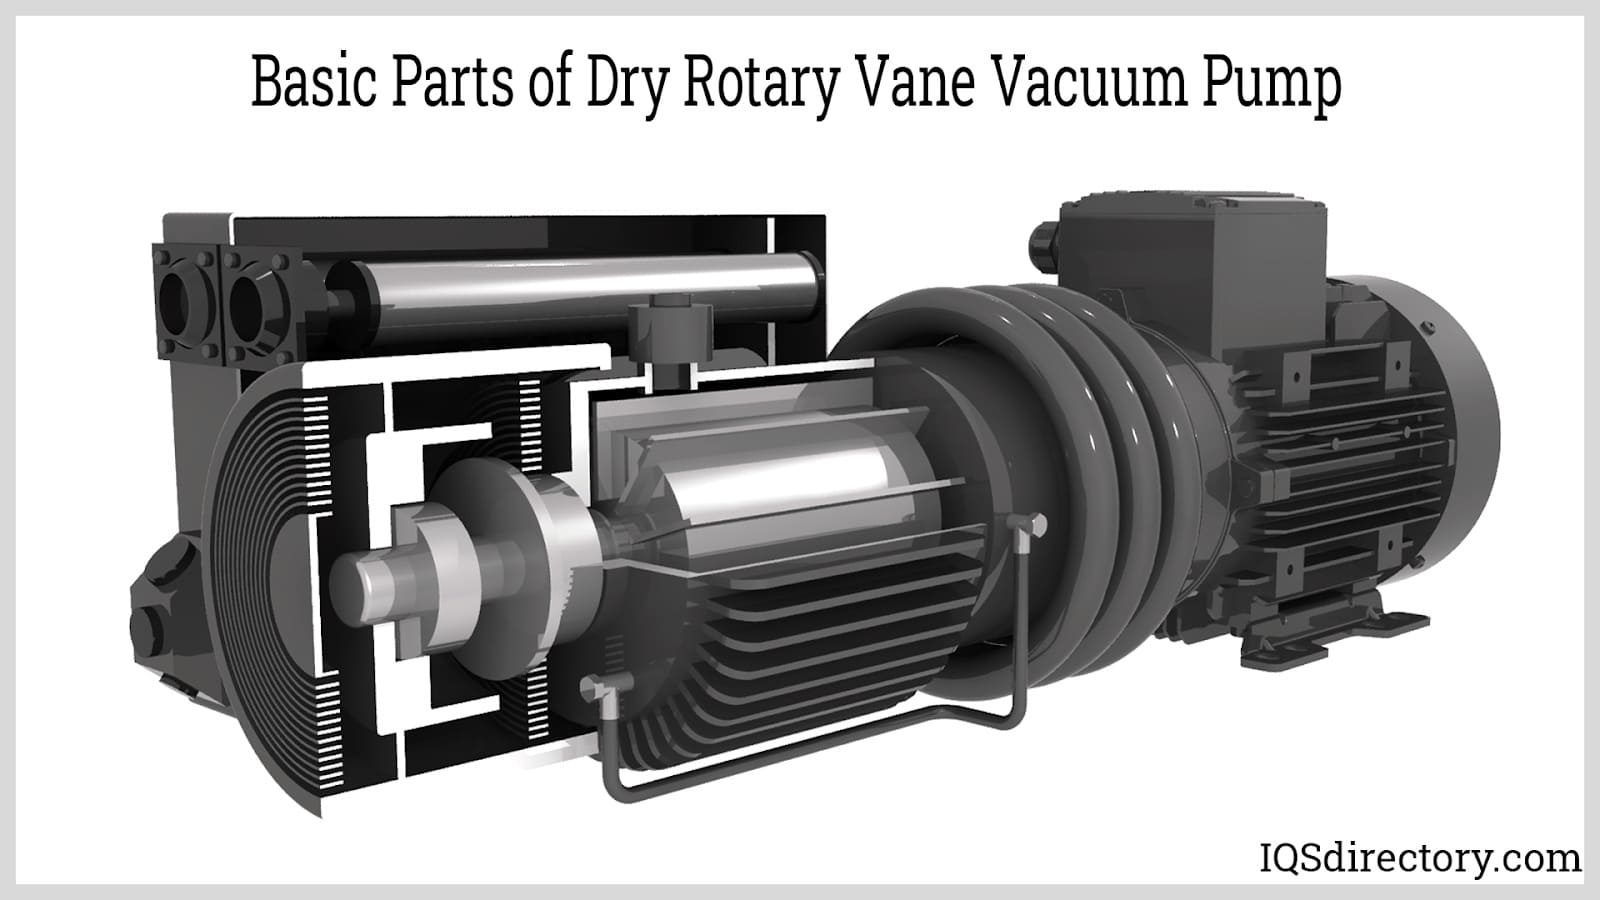 Basic Parts of Dry Rotary Vane Vacuum Pump